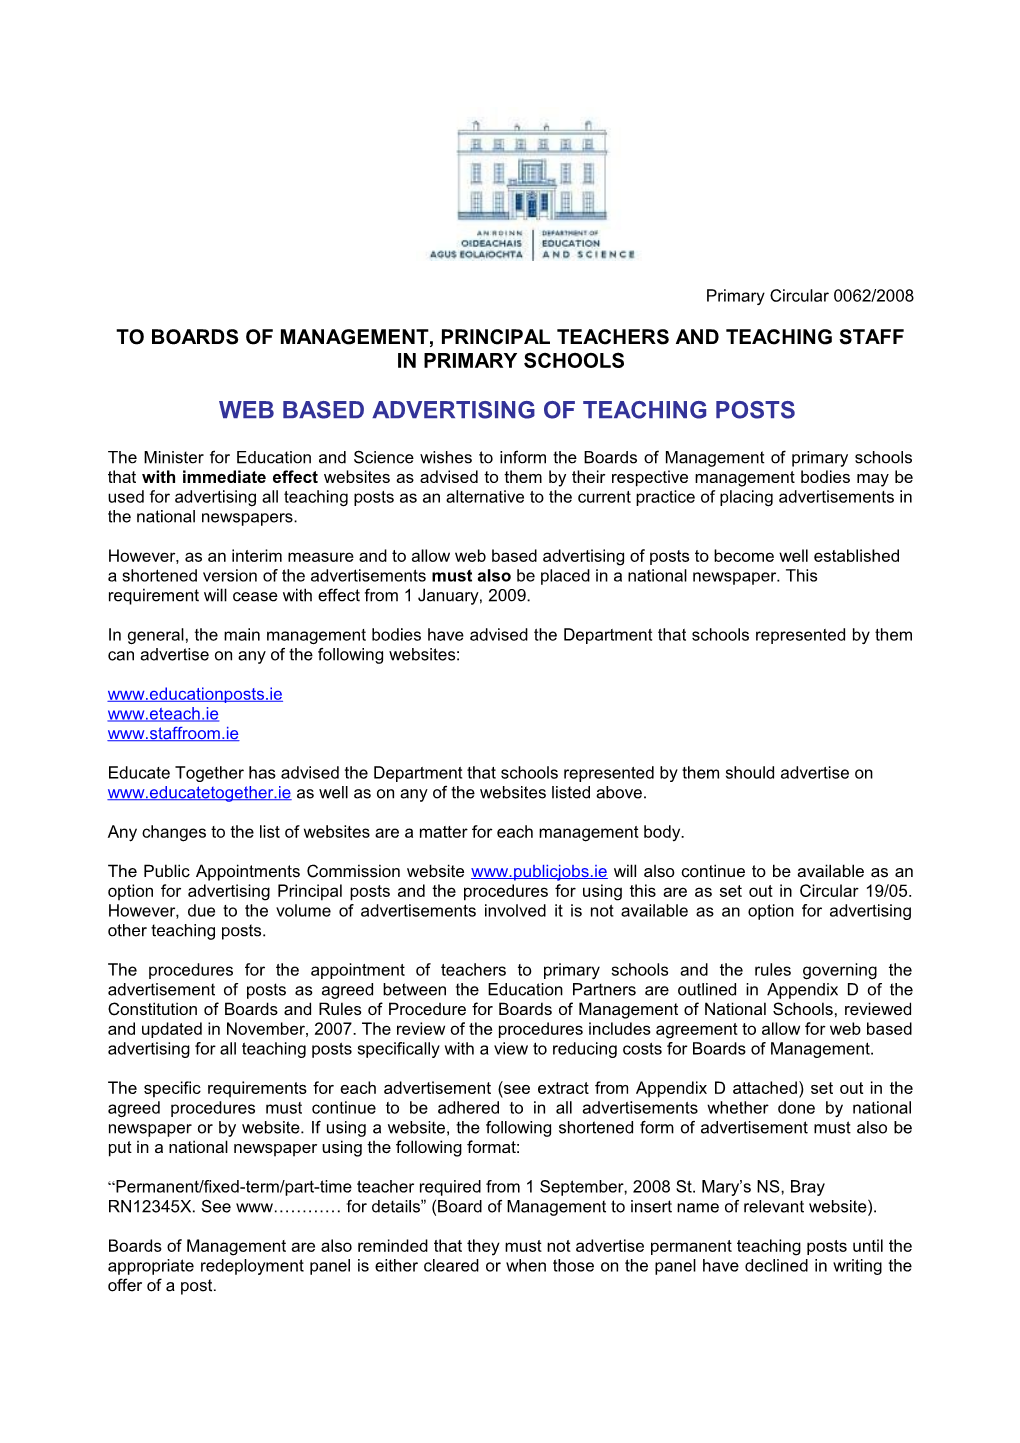 Web Based Advertising Of Teaching Posts (File Format Word 55KB)